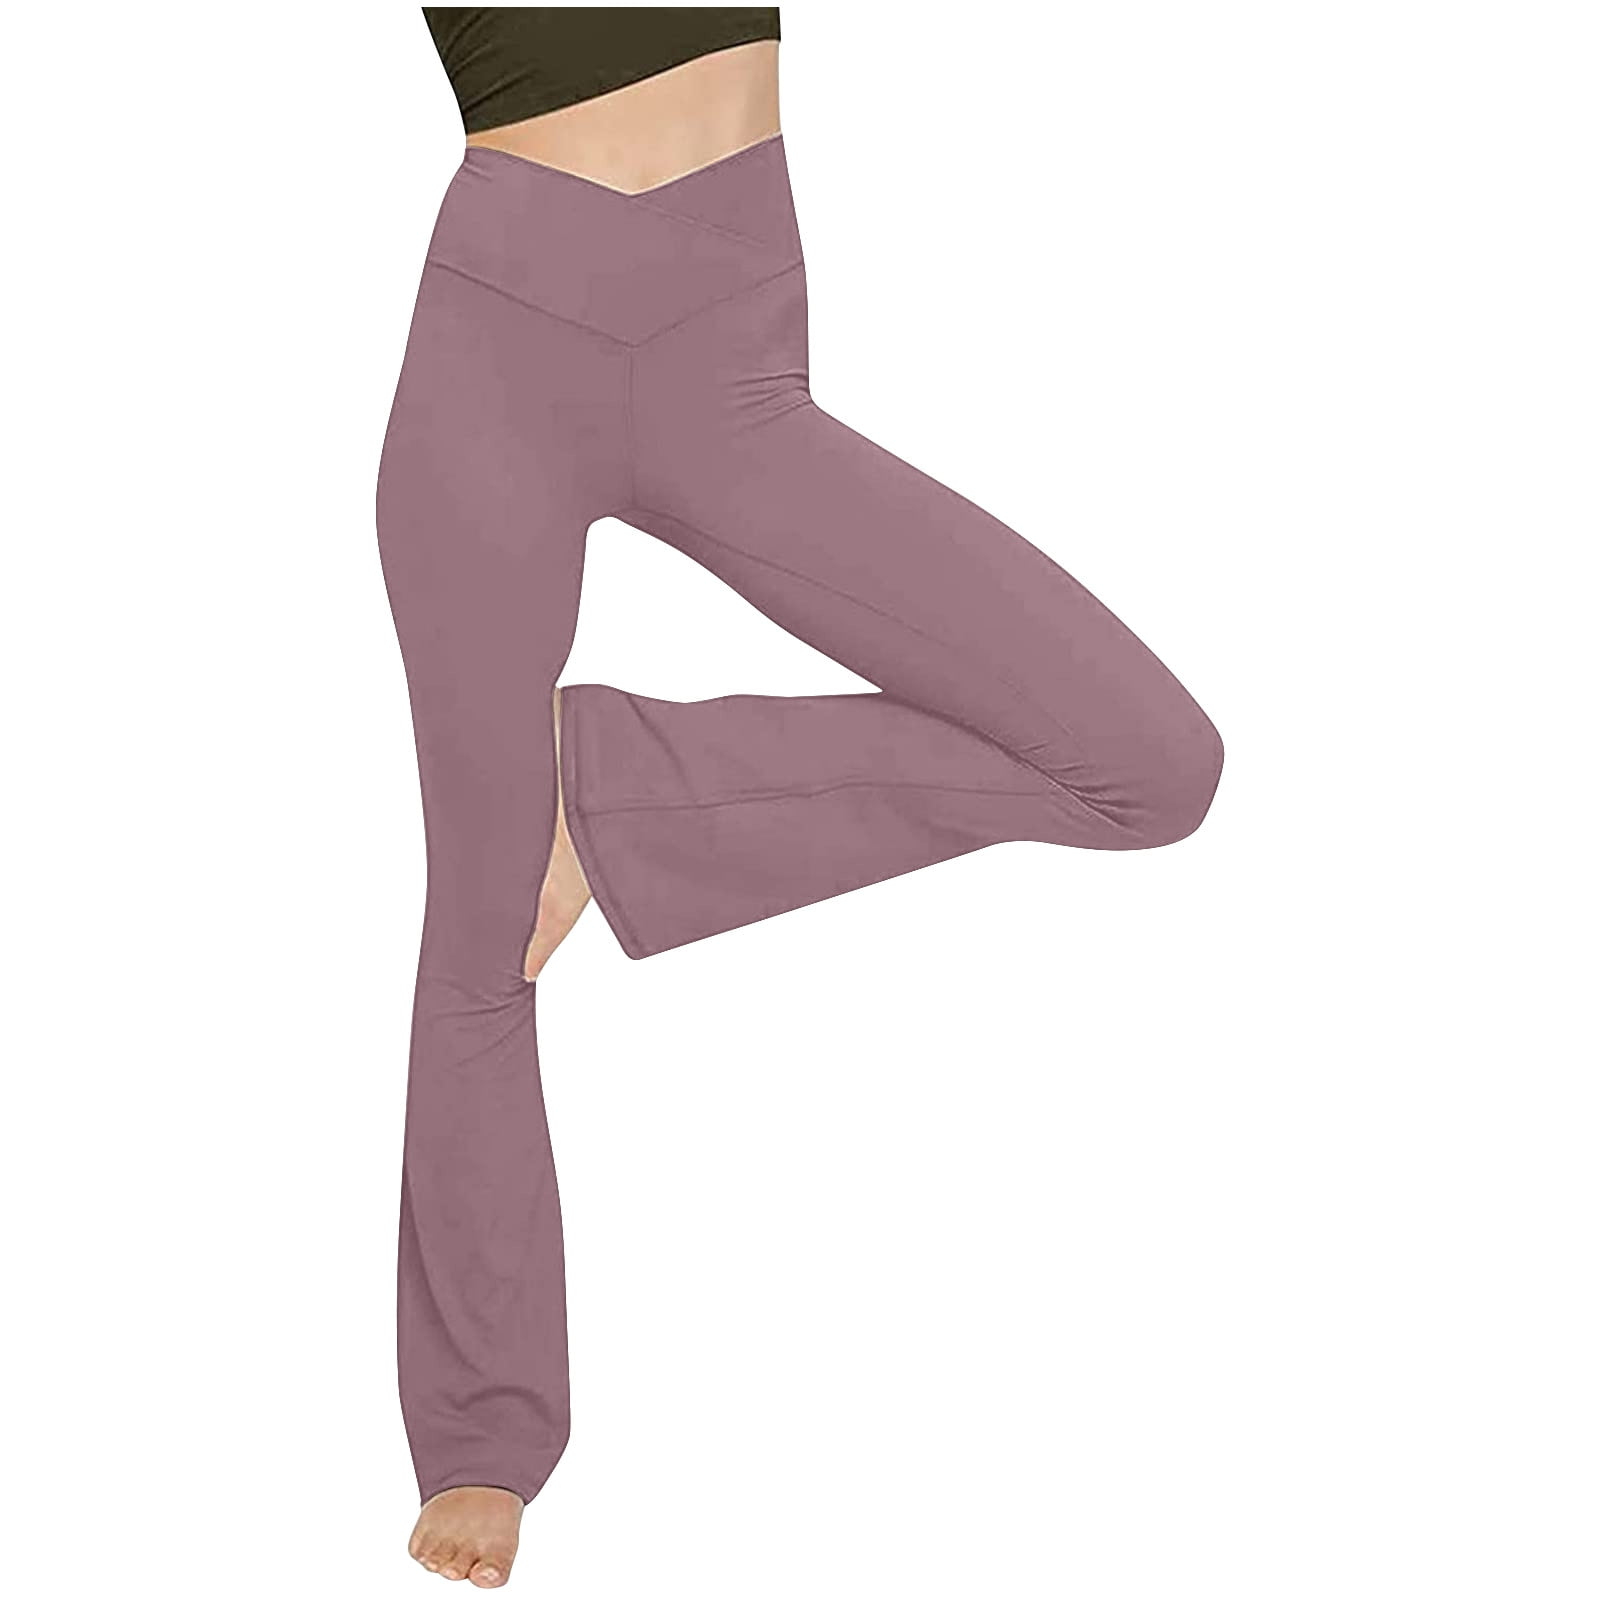  8QIDA Women Leggings Wide Leg Yoga Pants Finess Pants